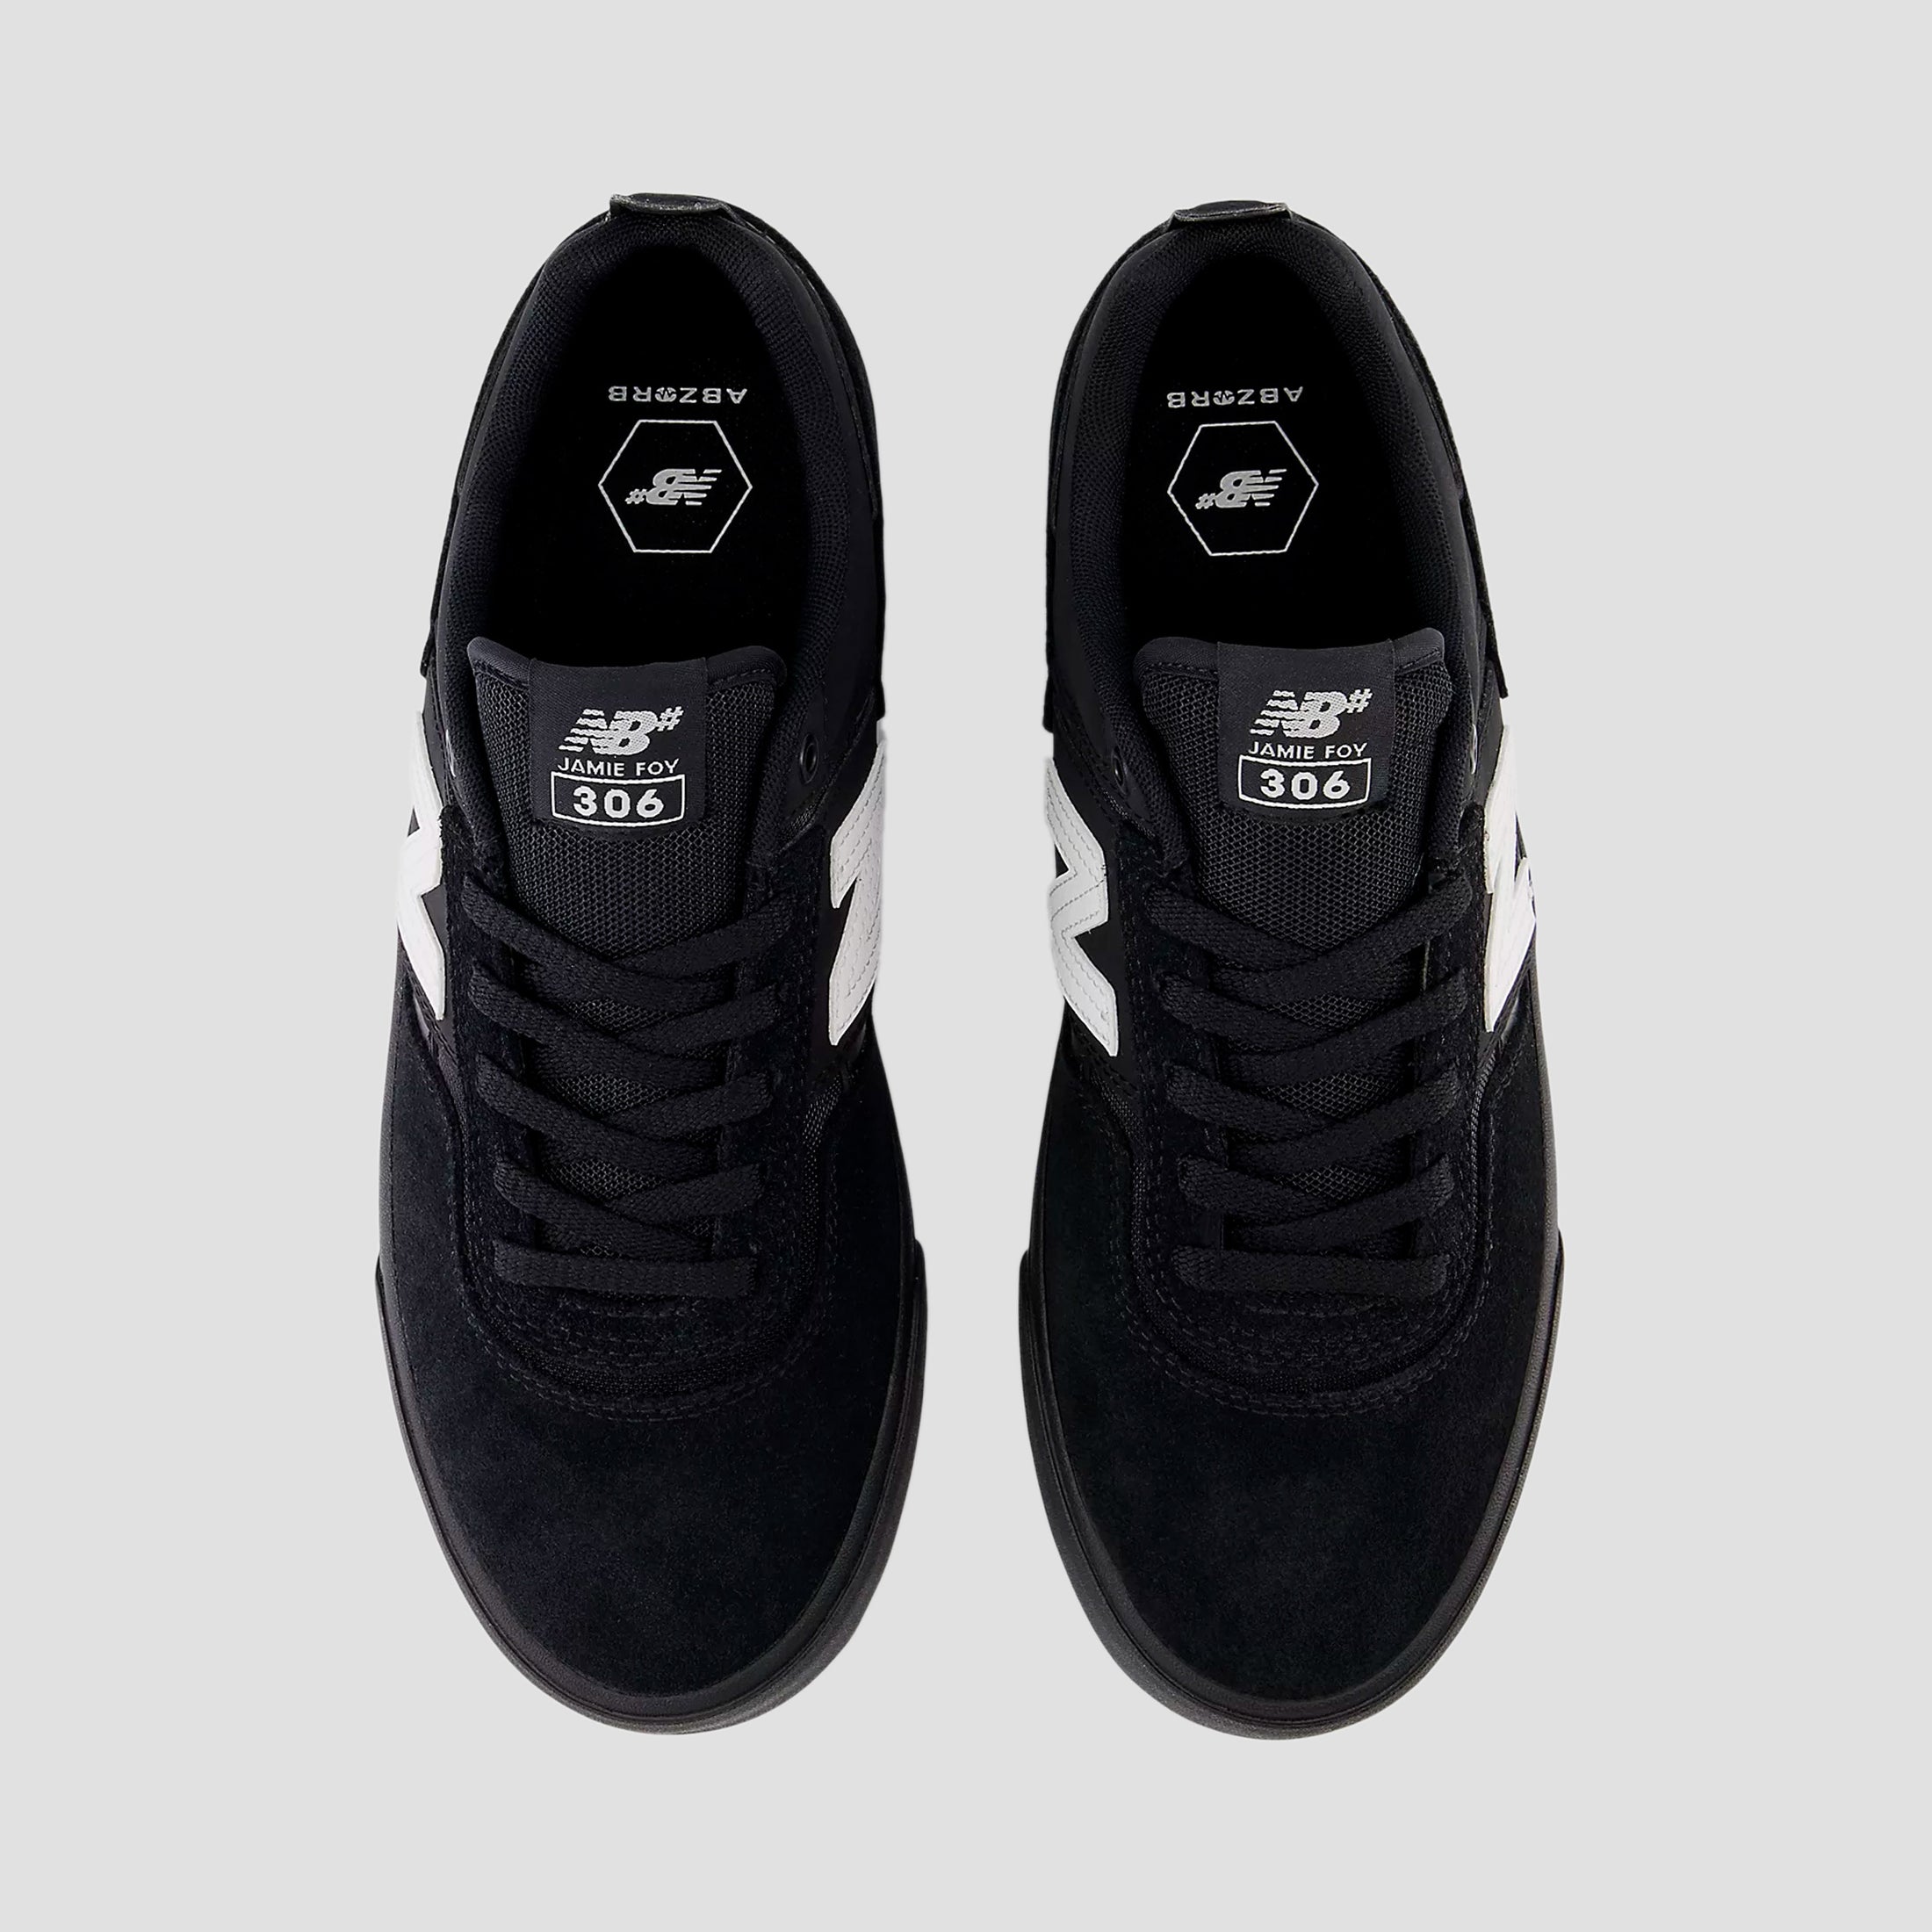 New Balance 306 Shoes Black / Black